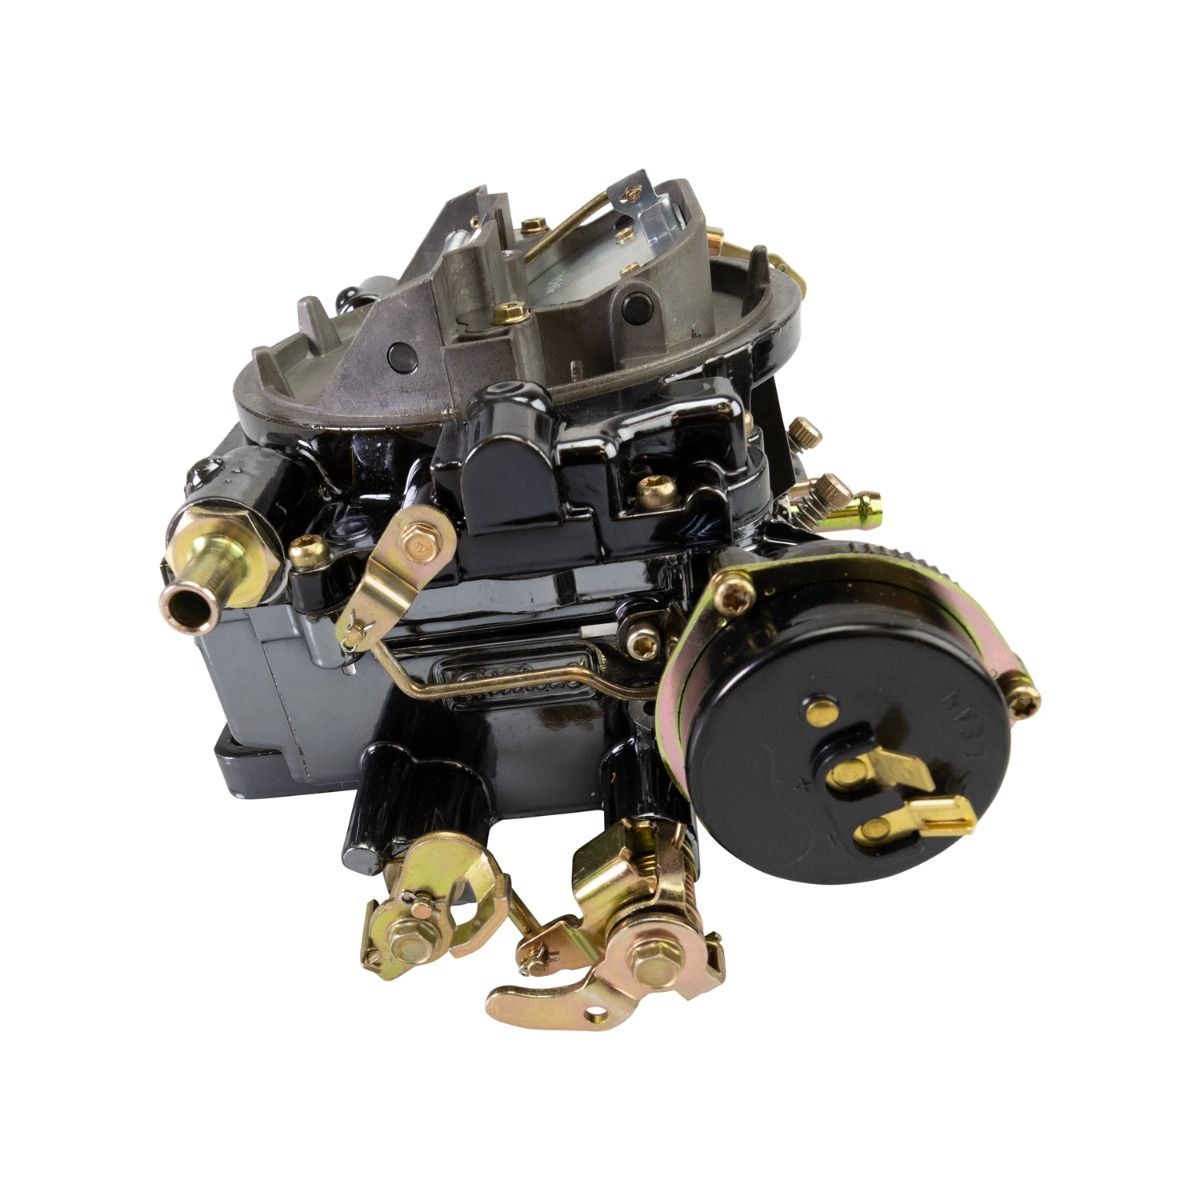 Edelbrock AVS2 650 CFM Carburetor #1906-BP Electric Choke, Black Plasma Finish